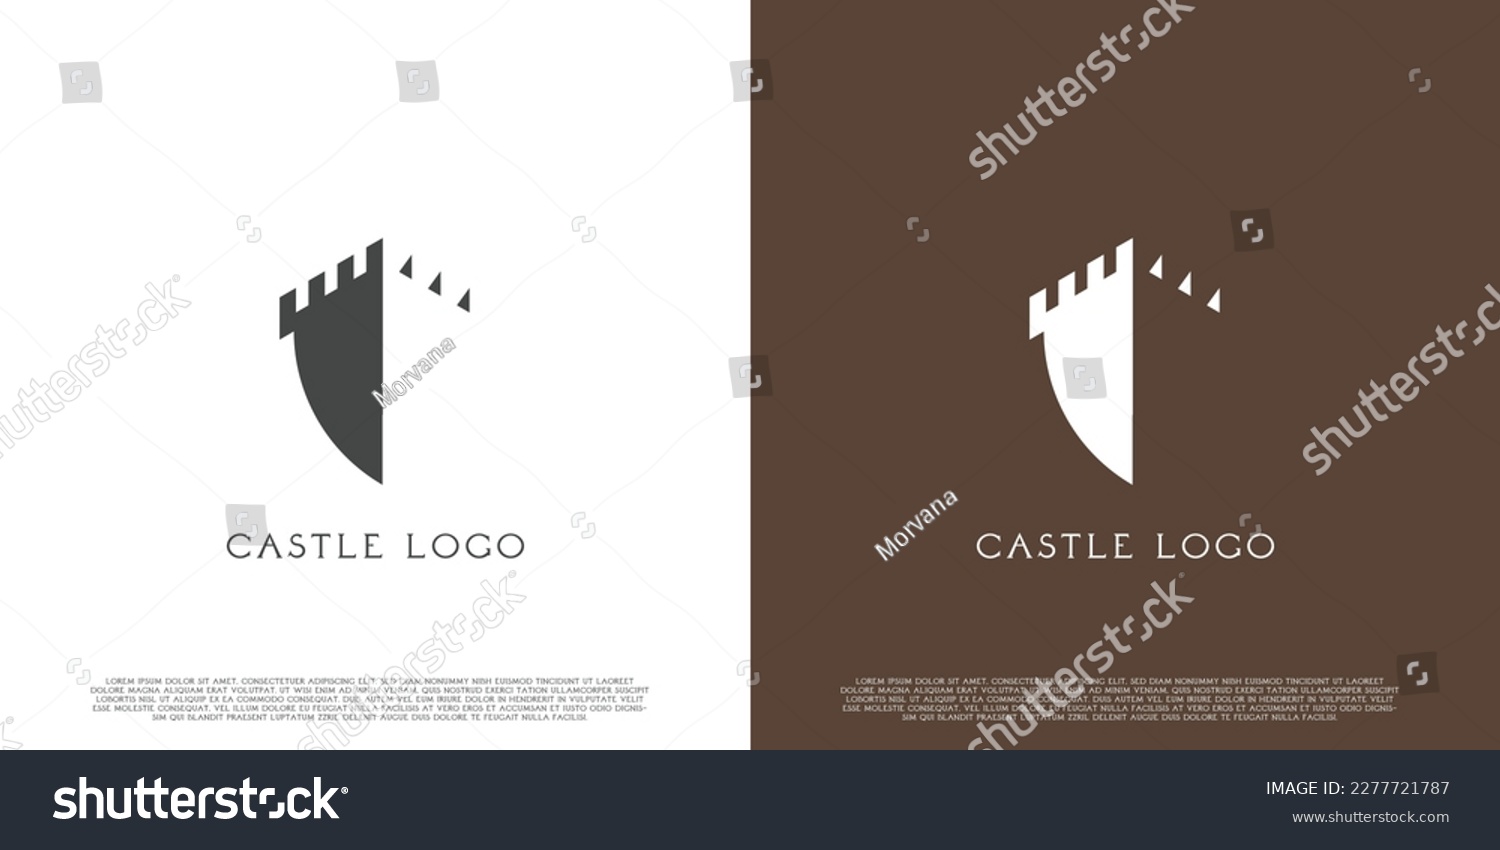 SVG of Shield castle logo design illustration. Silhouette castle shield tower brick guild kingdom kingdom. Simple medieval building vintage icon template. Perfect for web or app icons. svg